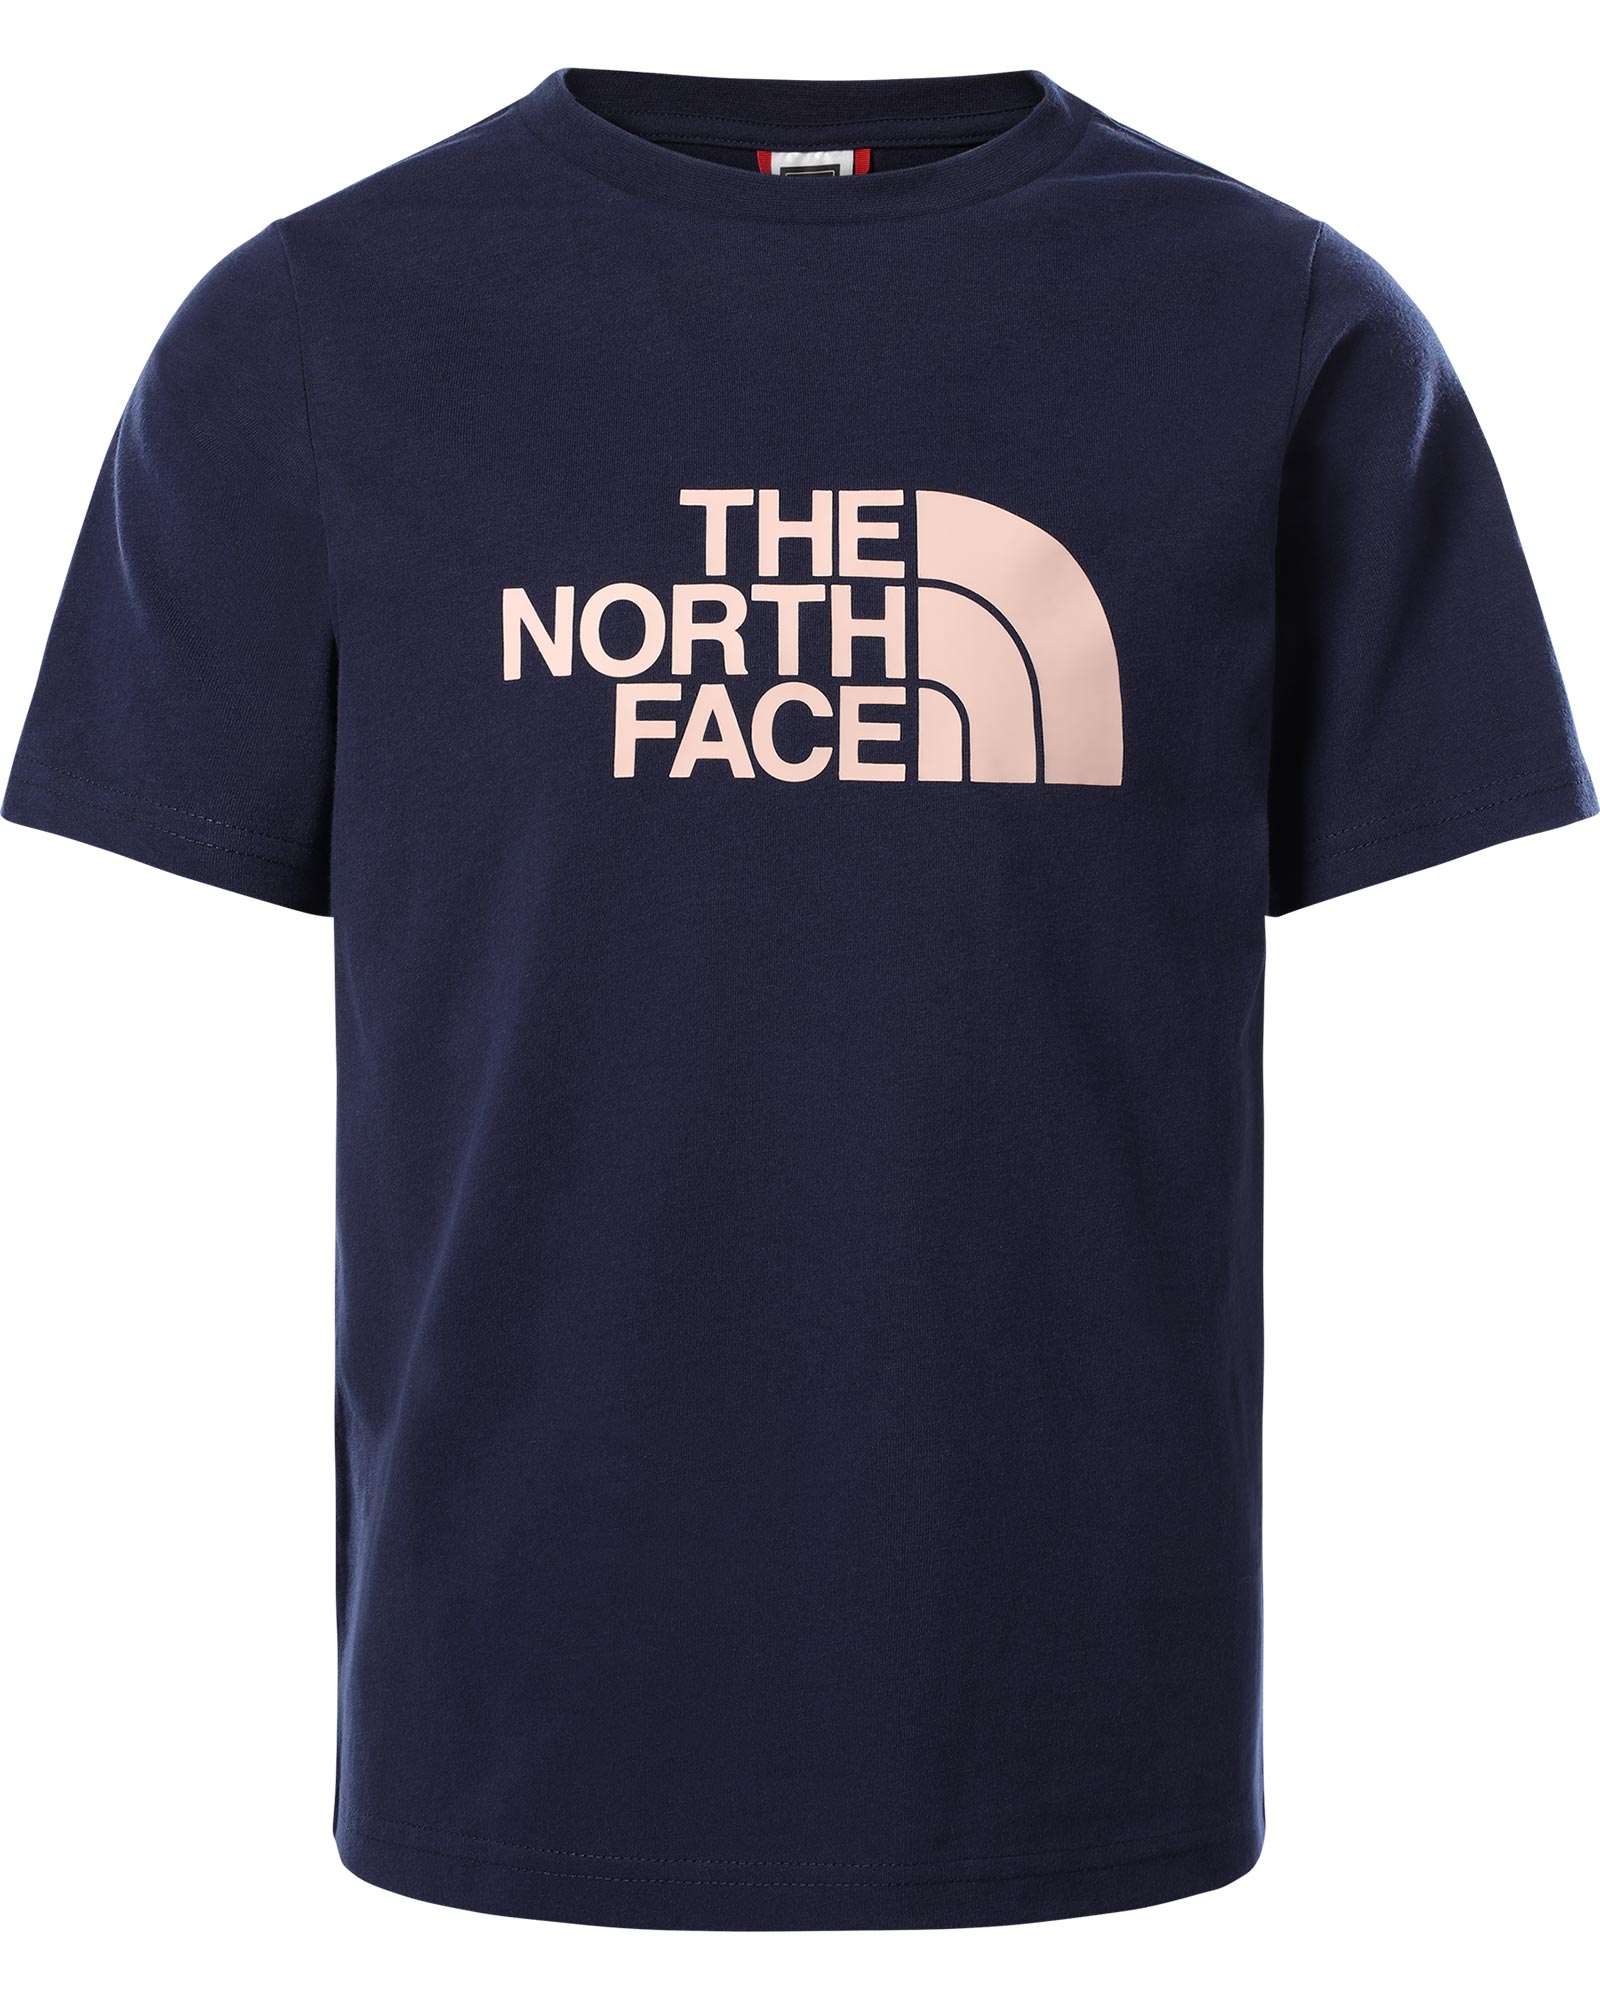 The North Face Easy Boyfriend Girls’ T Shirt - TNF Navy L